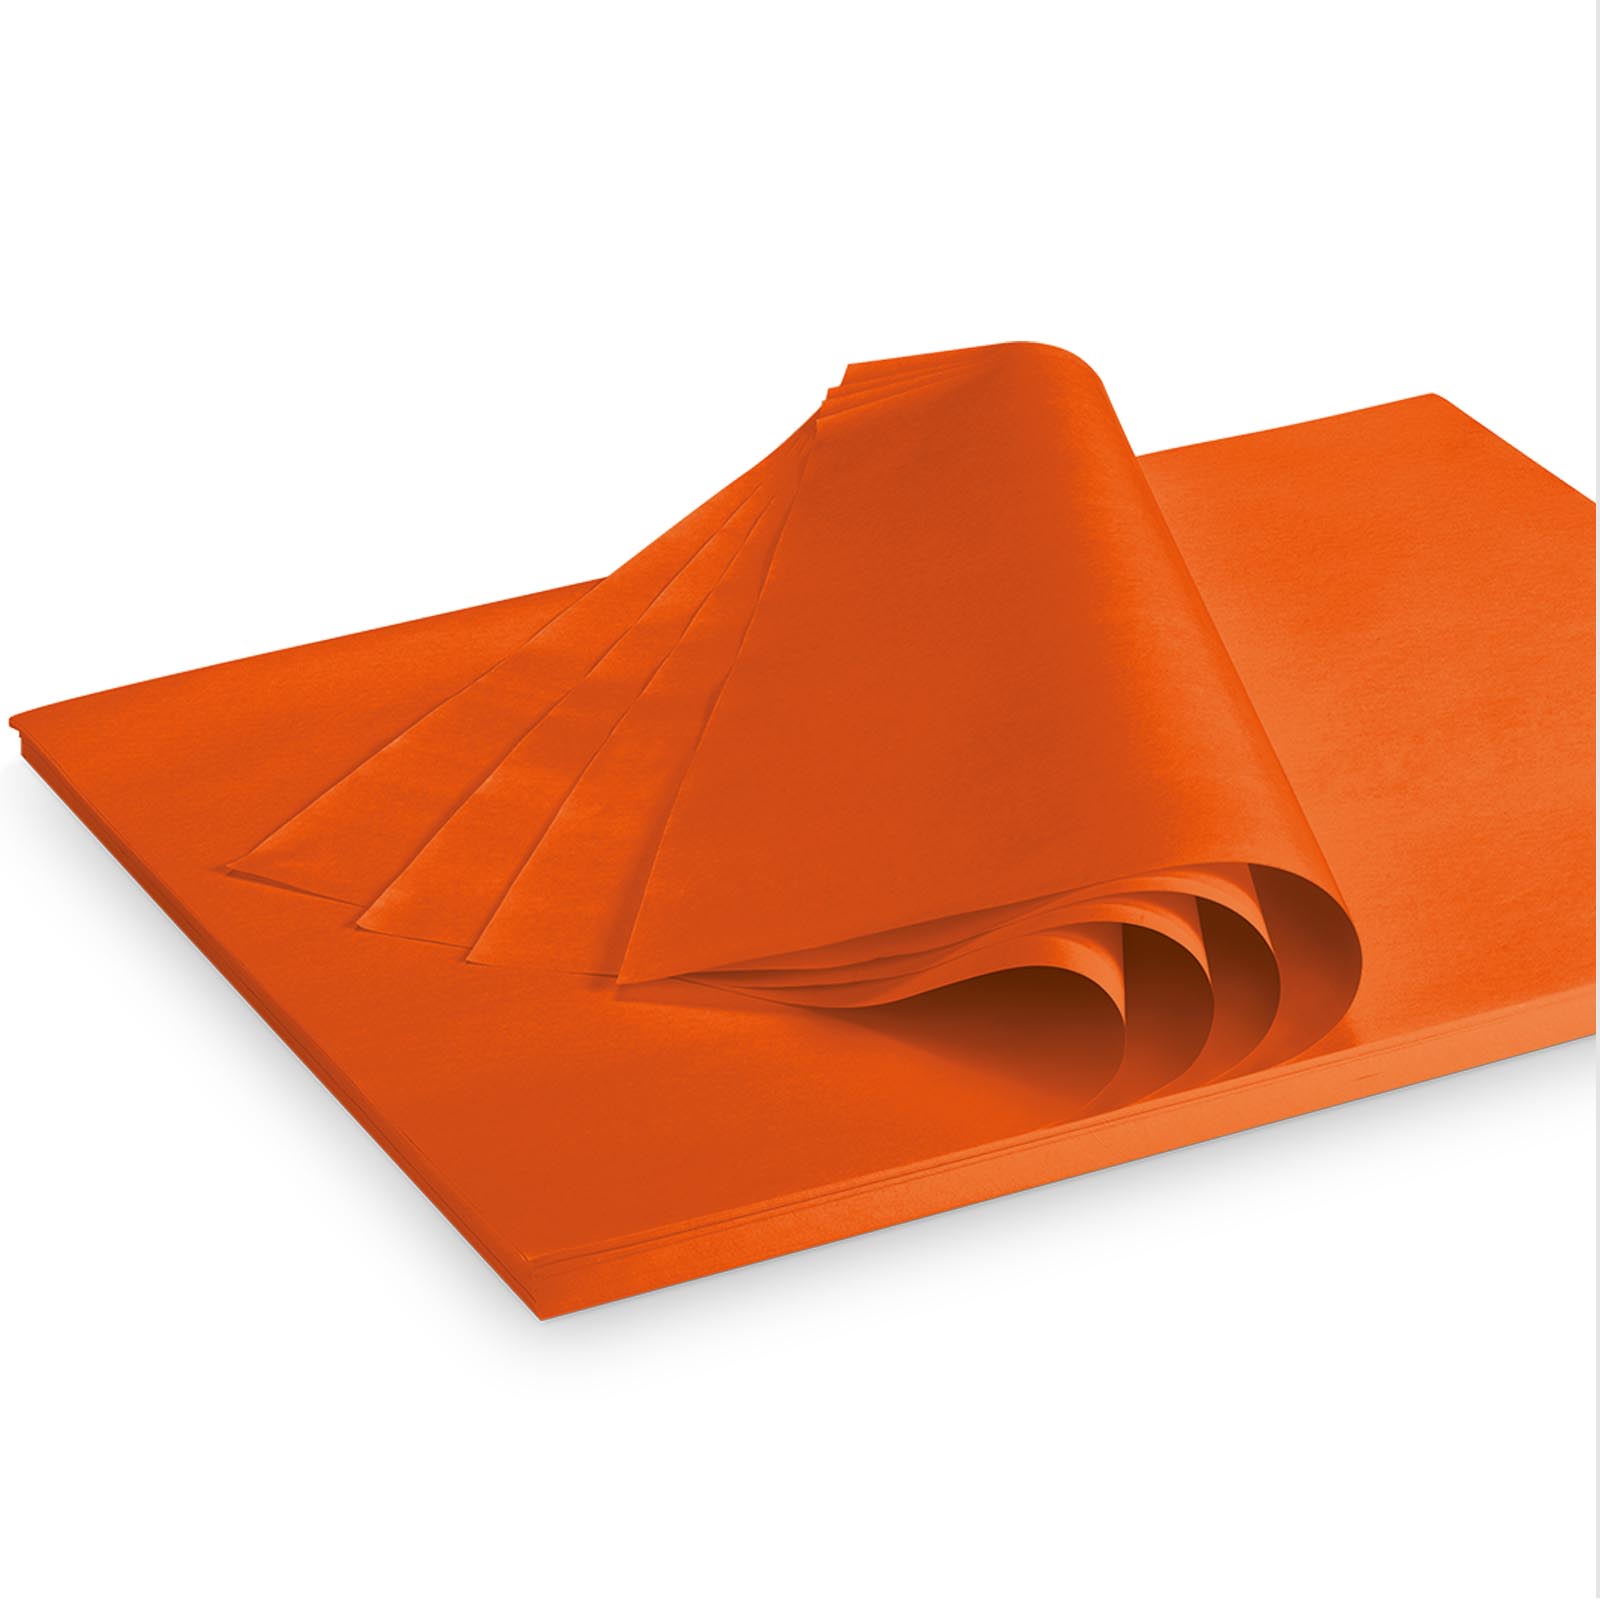 Seidenpapier 375x500mm orange 35g/m²,300 Bogen/ Karton = 2kg